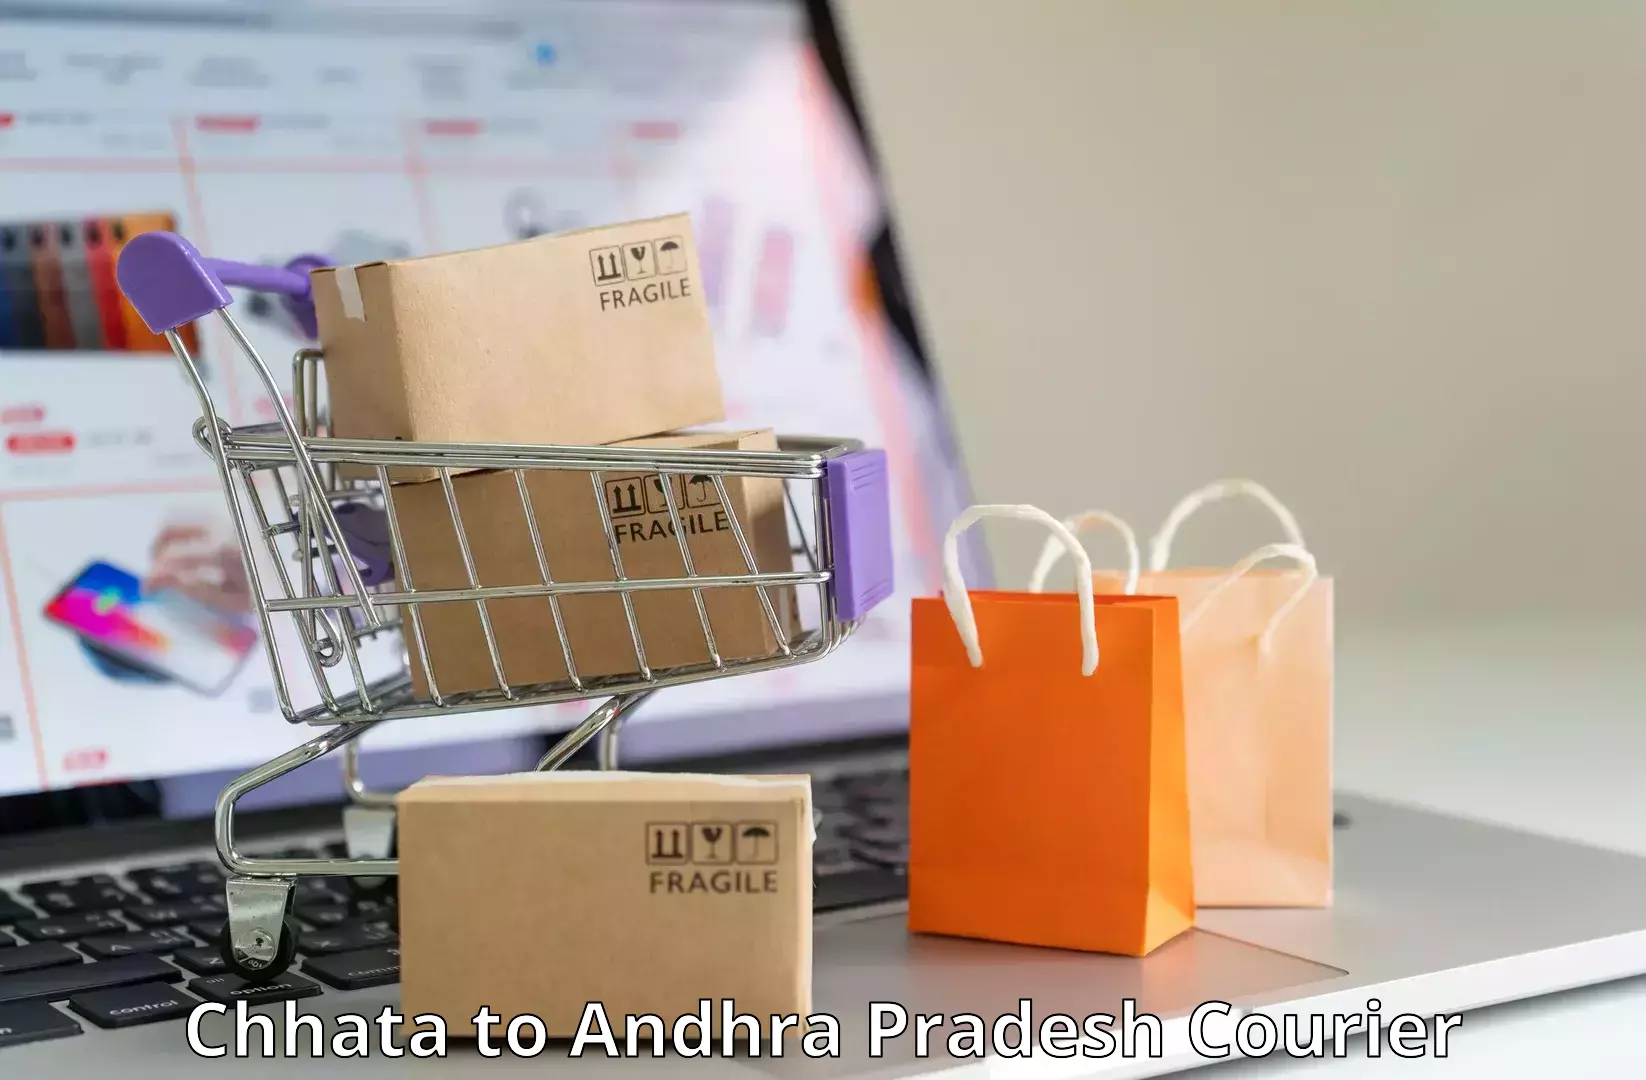 Courier service comparison Chhata to Andhra Pradesh